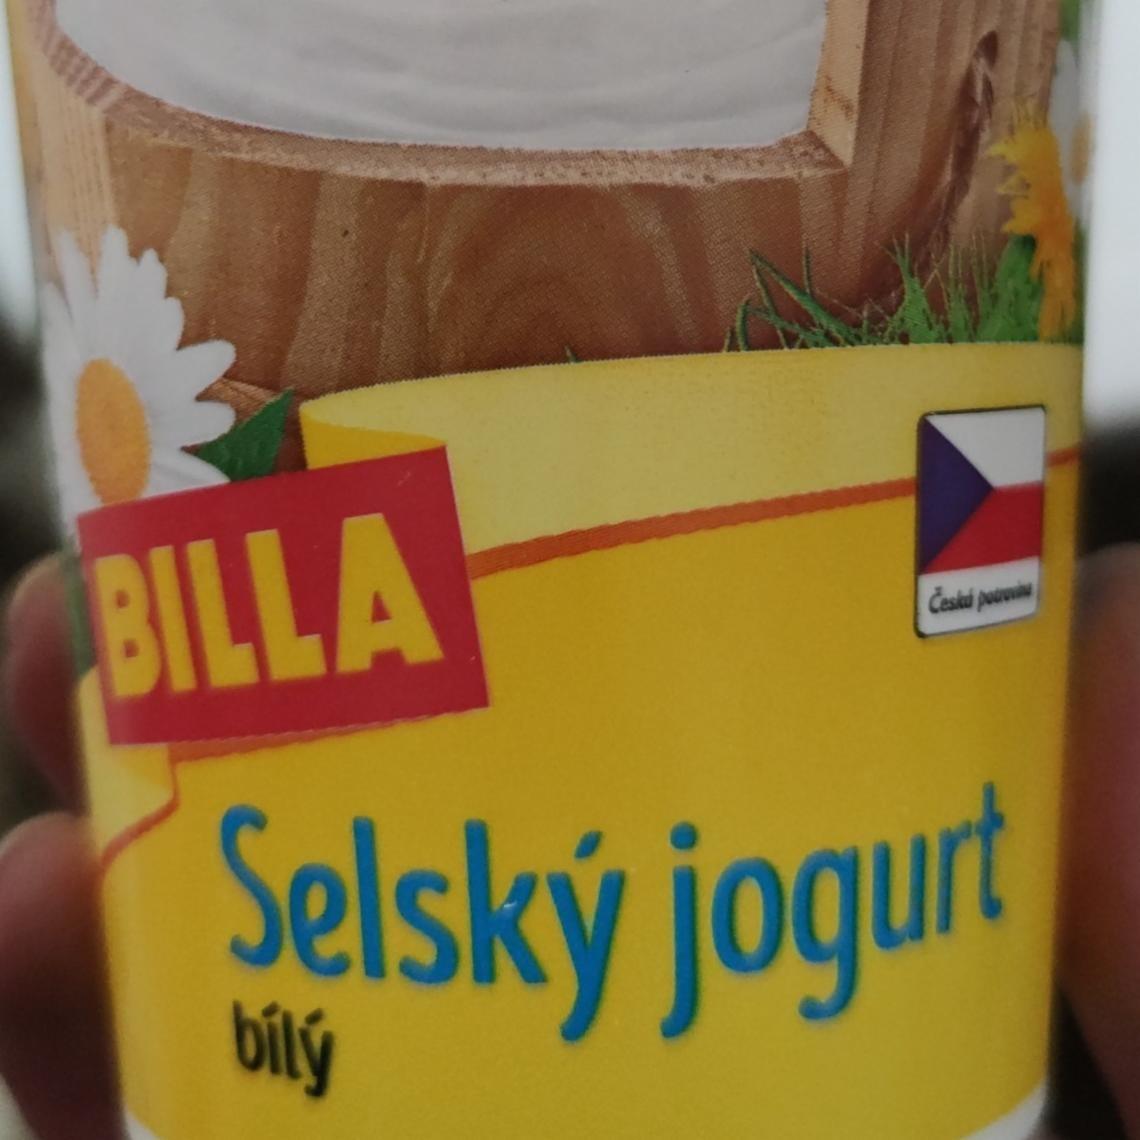 Фото - Йогурт белый 3.6% Selsky Jogurt Billa